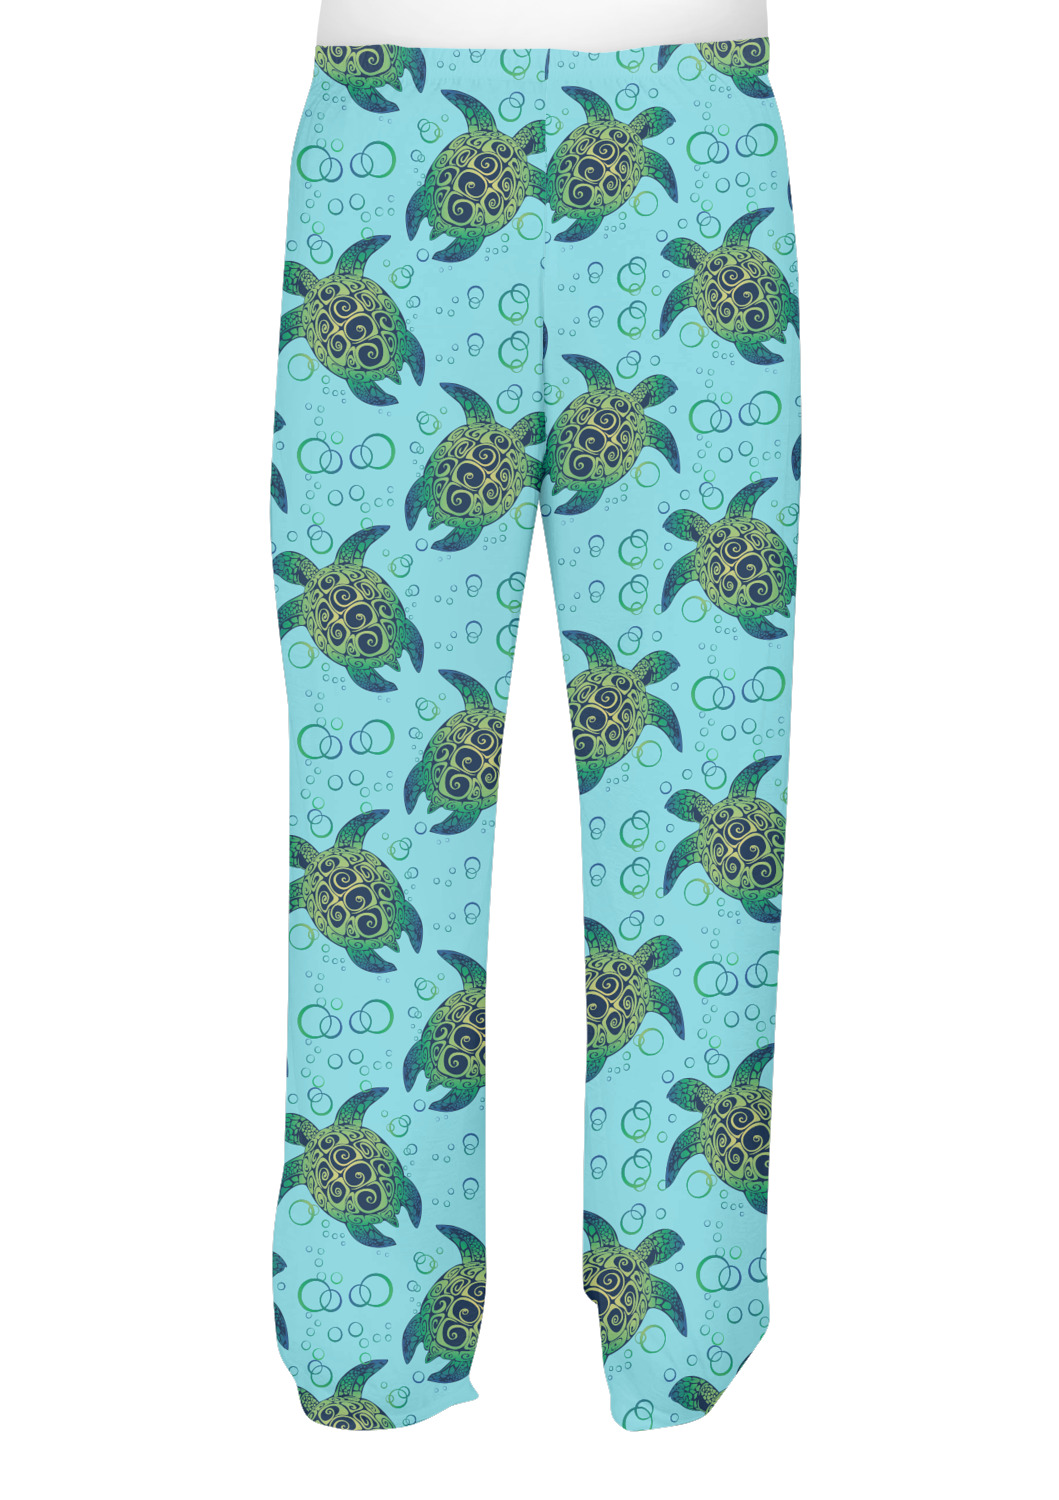 Sea Turtles Design Custom Mens Pajama Pants